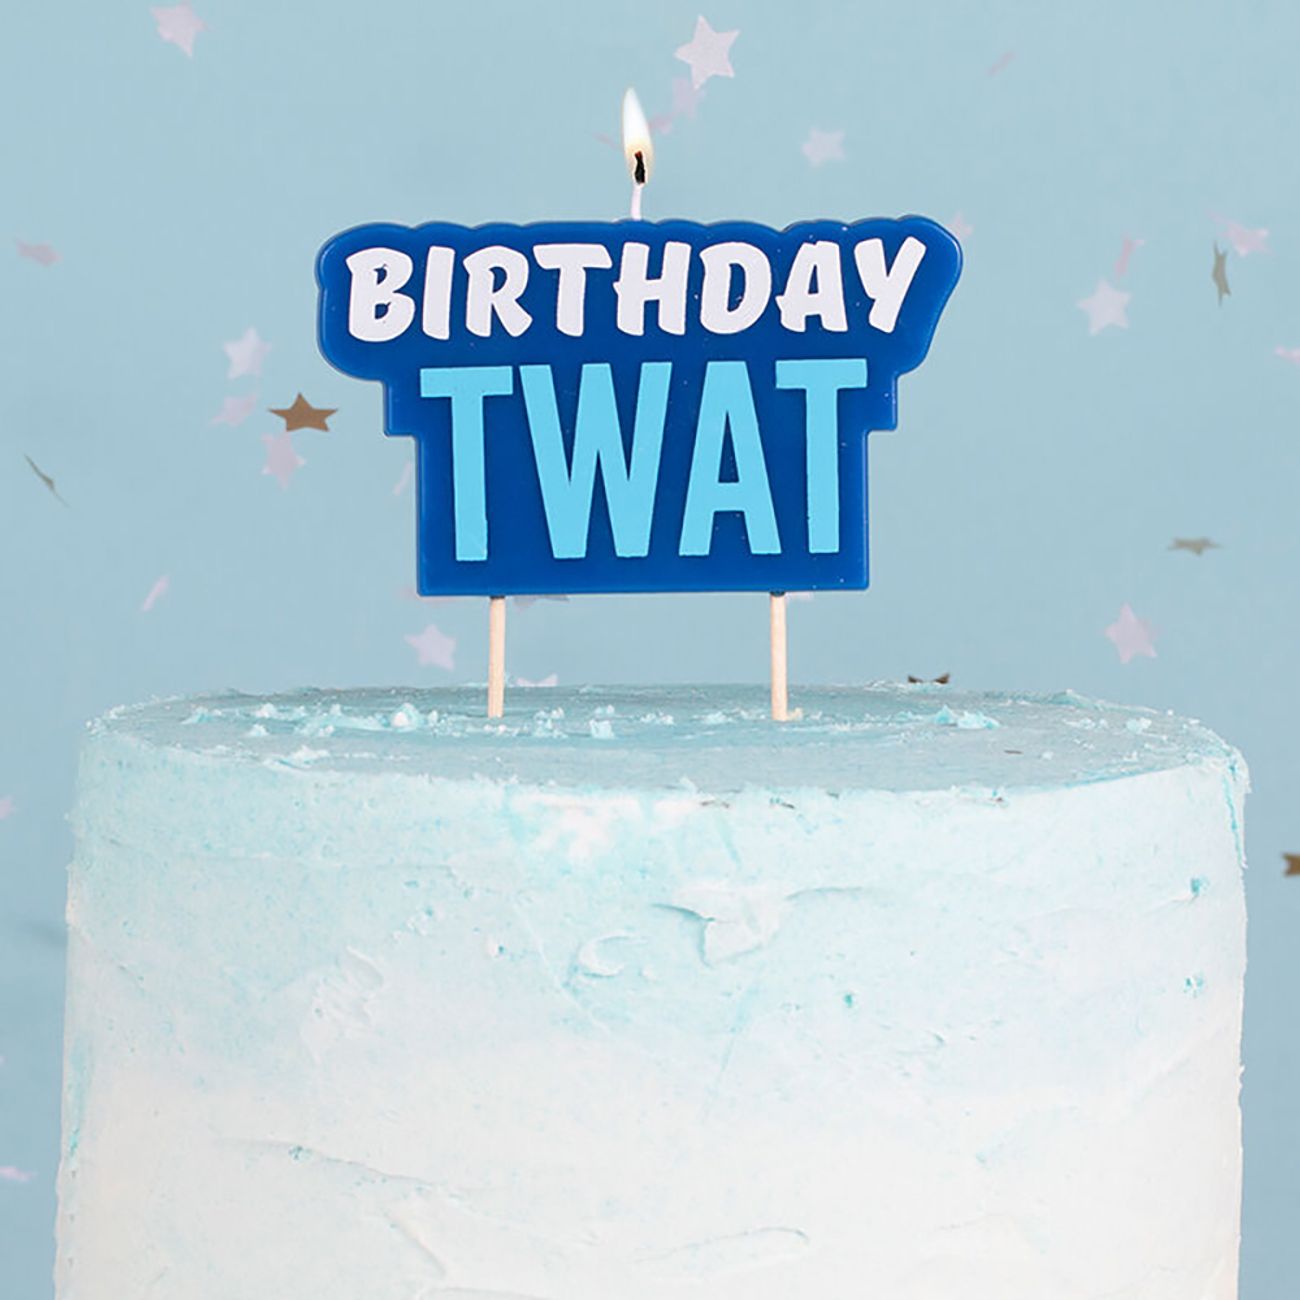 tartljus-birthday-twat-1